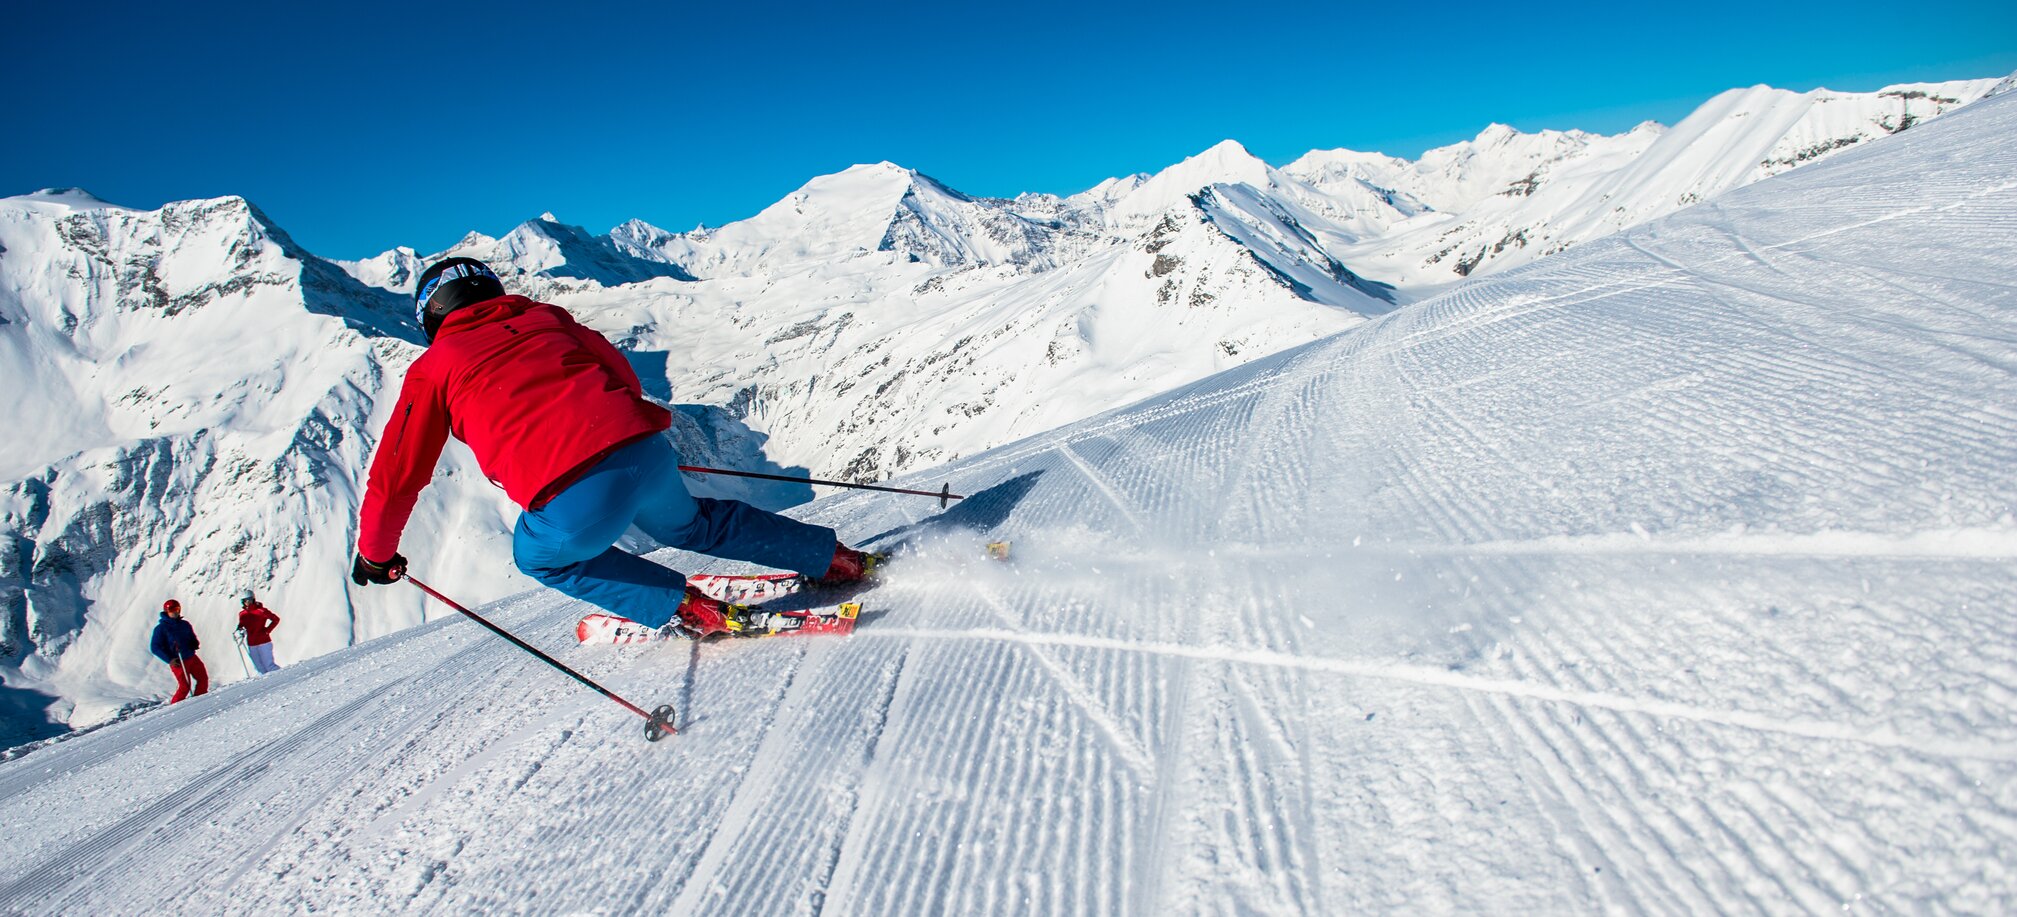 Skiing in Ski amadé - Austria's greatest ski paradise